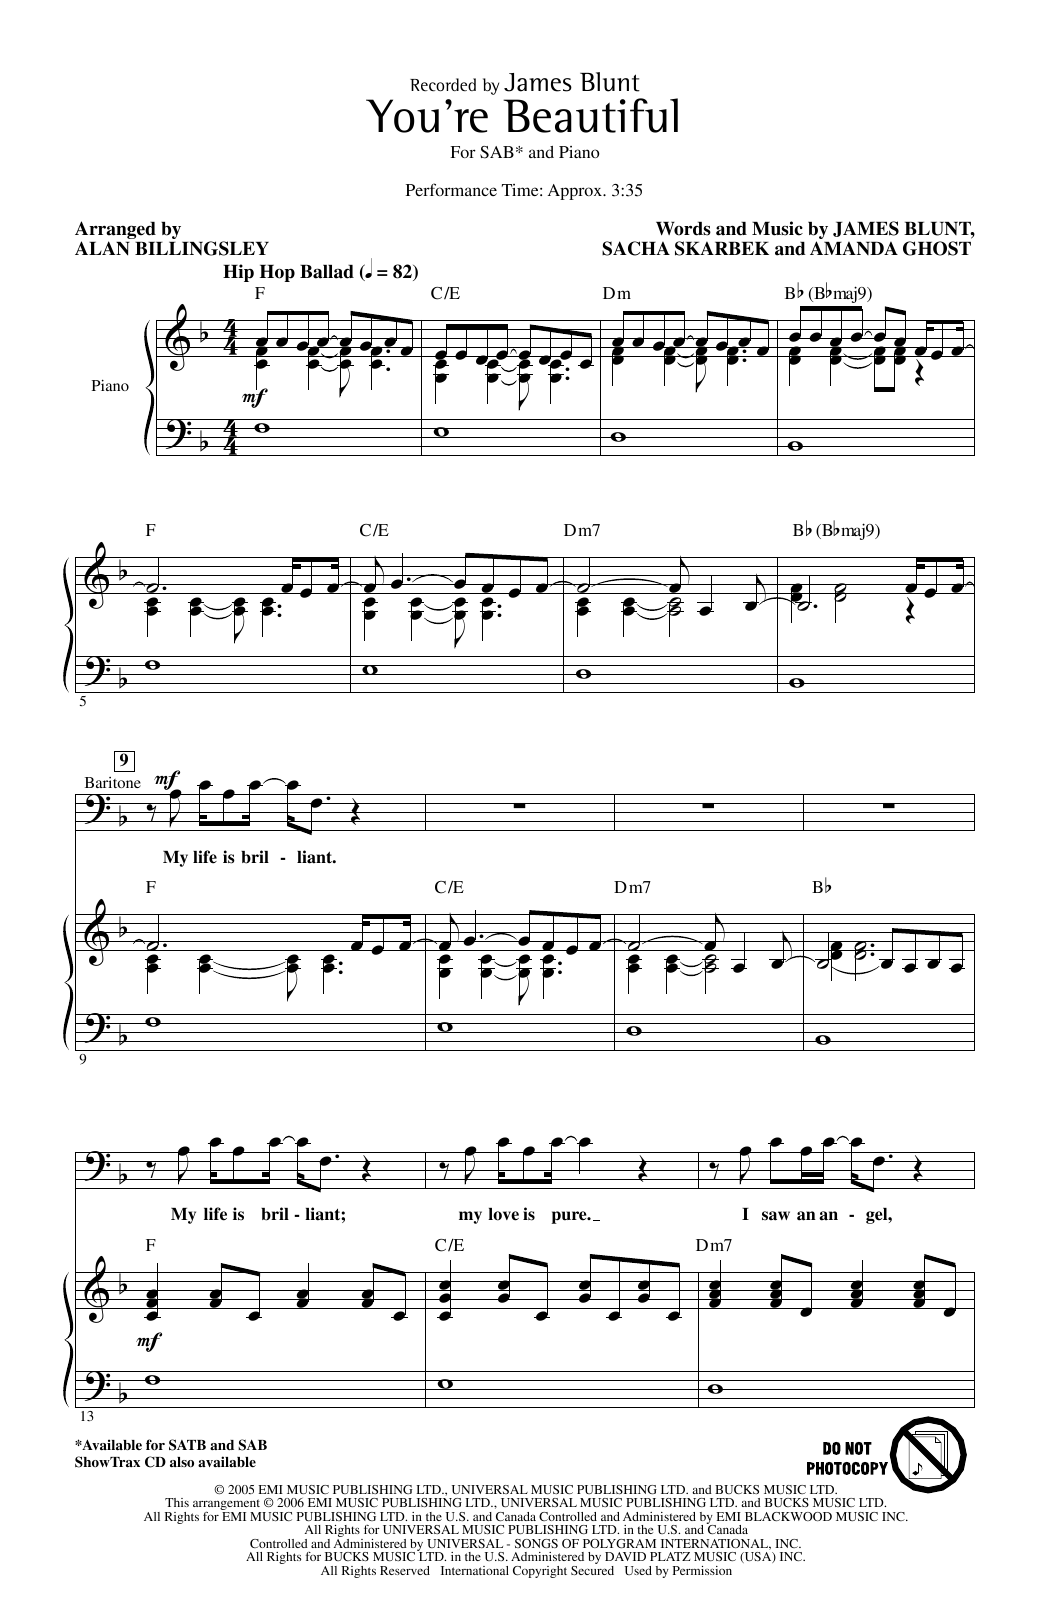 James Blunt You're Beautiful (arr. Alan Billingsley) Sheet Music Notes & Chords for SATB Choir - Download or Print PDF